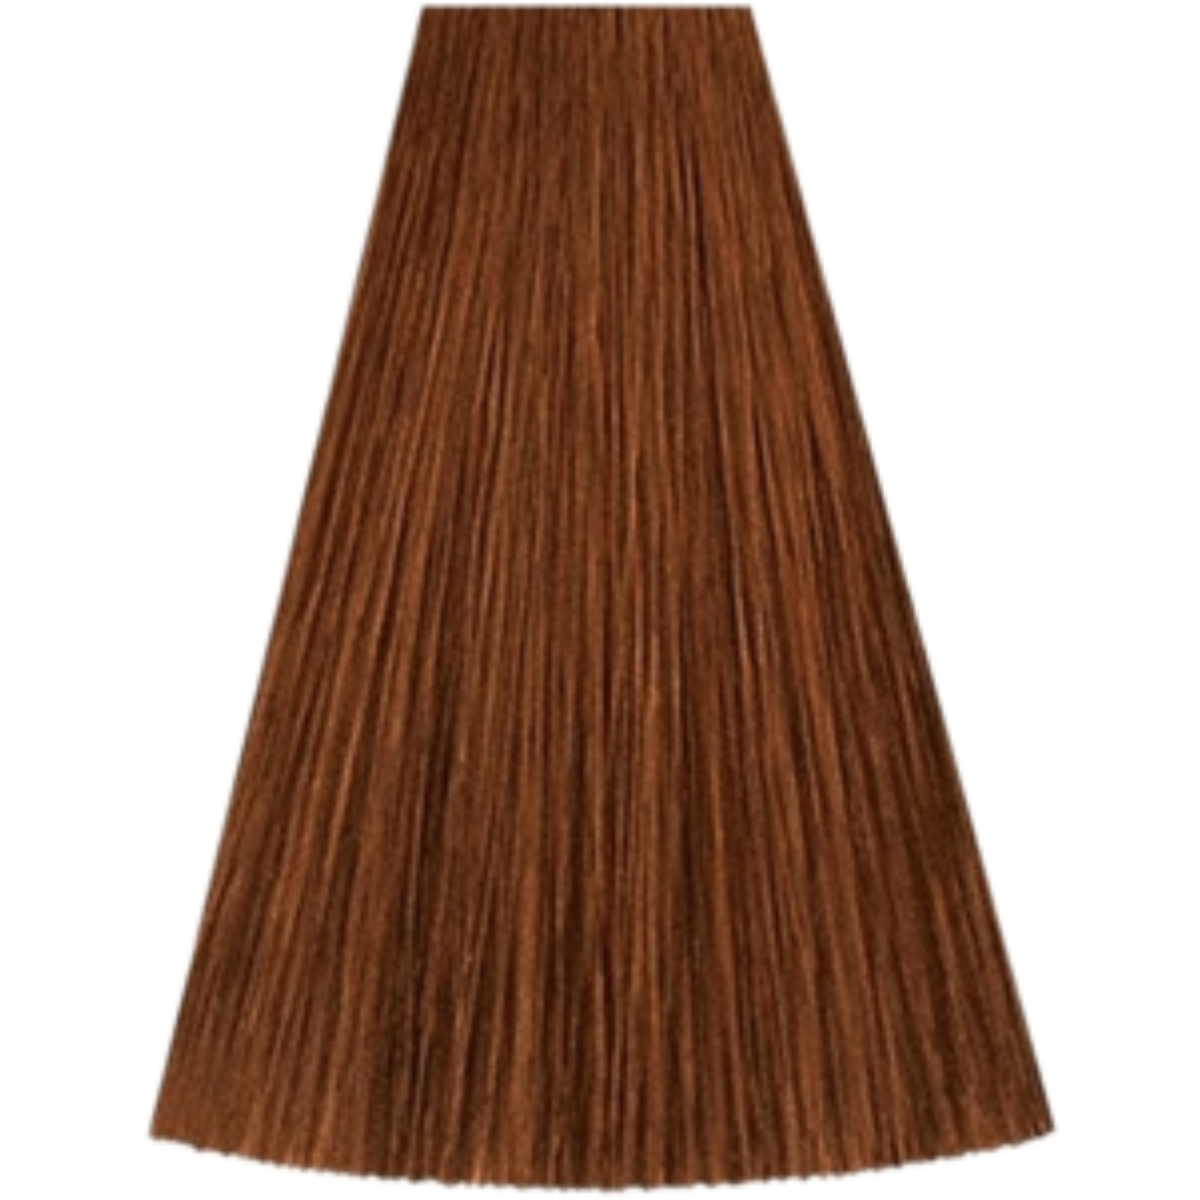 צבע שיער גוון 8/41 LIGHT BLONDE RED ASH קאדוס KADUS צבע לשיער 60 גרם